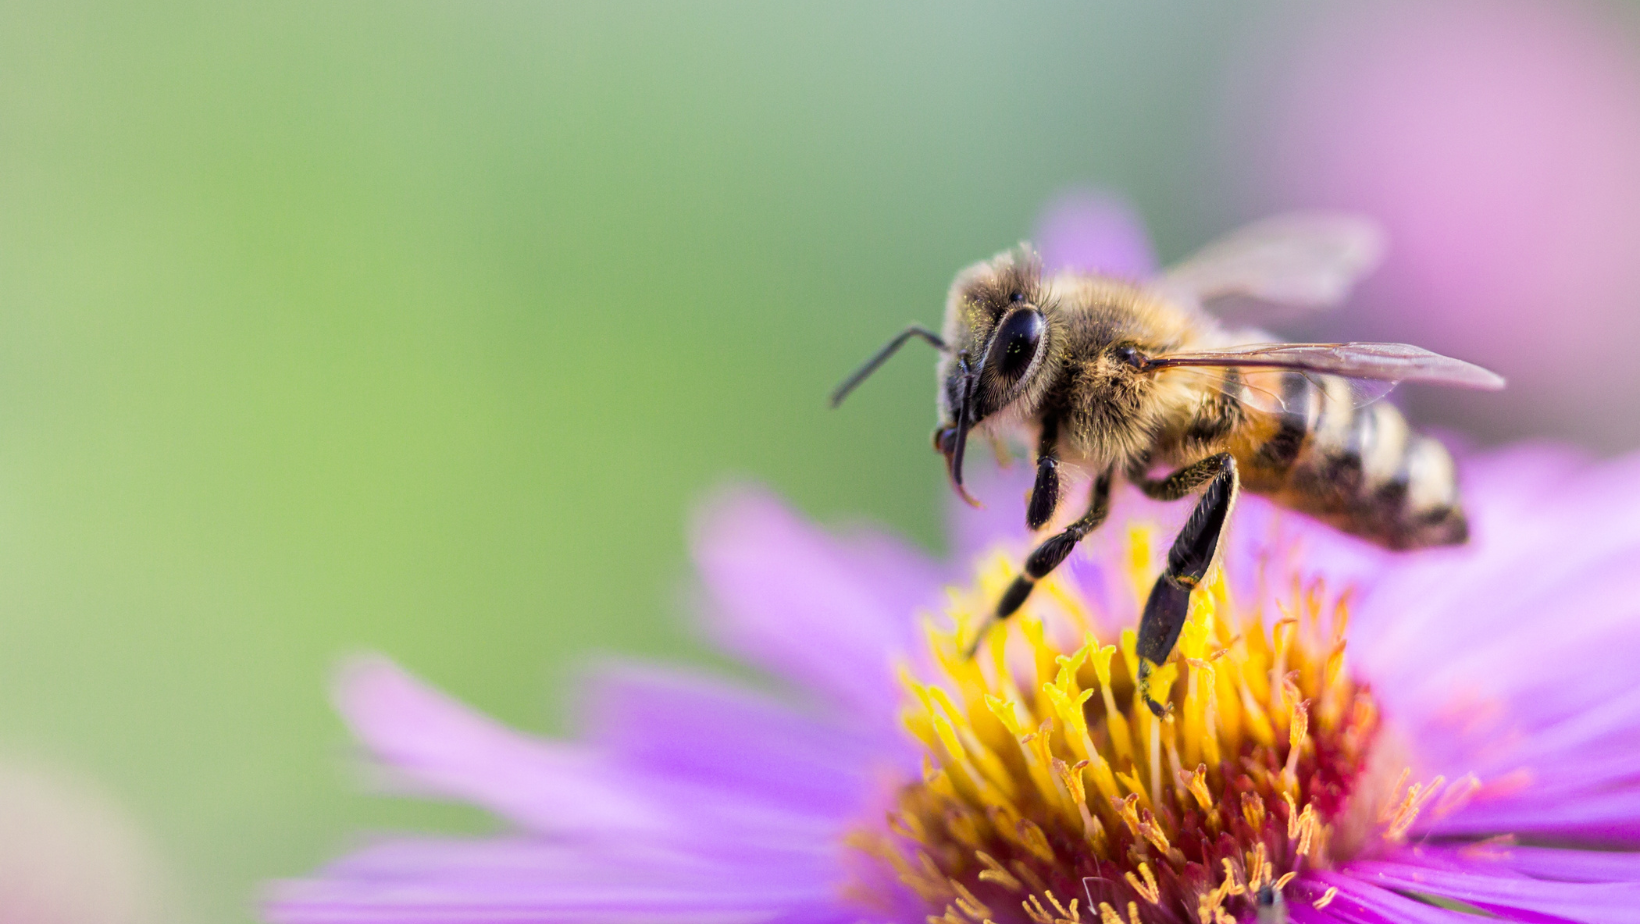 Ways to Be Kind to Pollinators